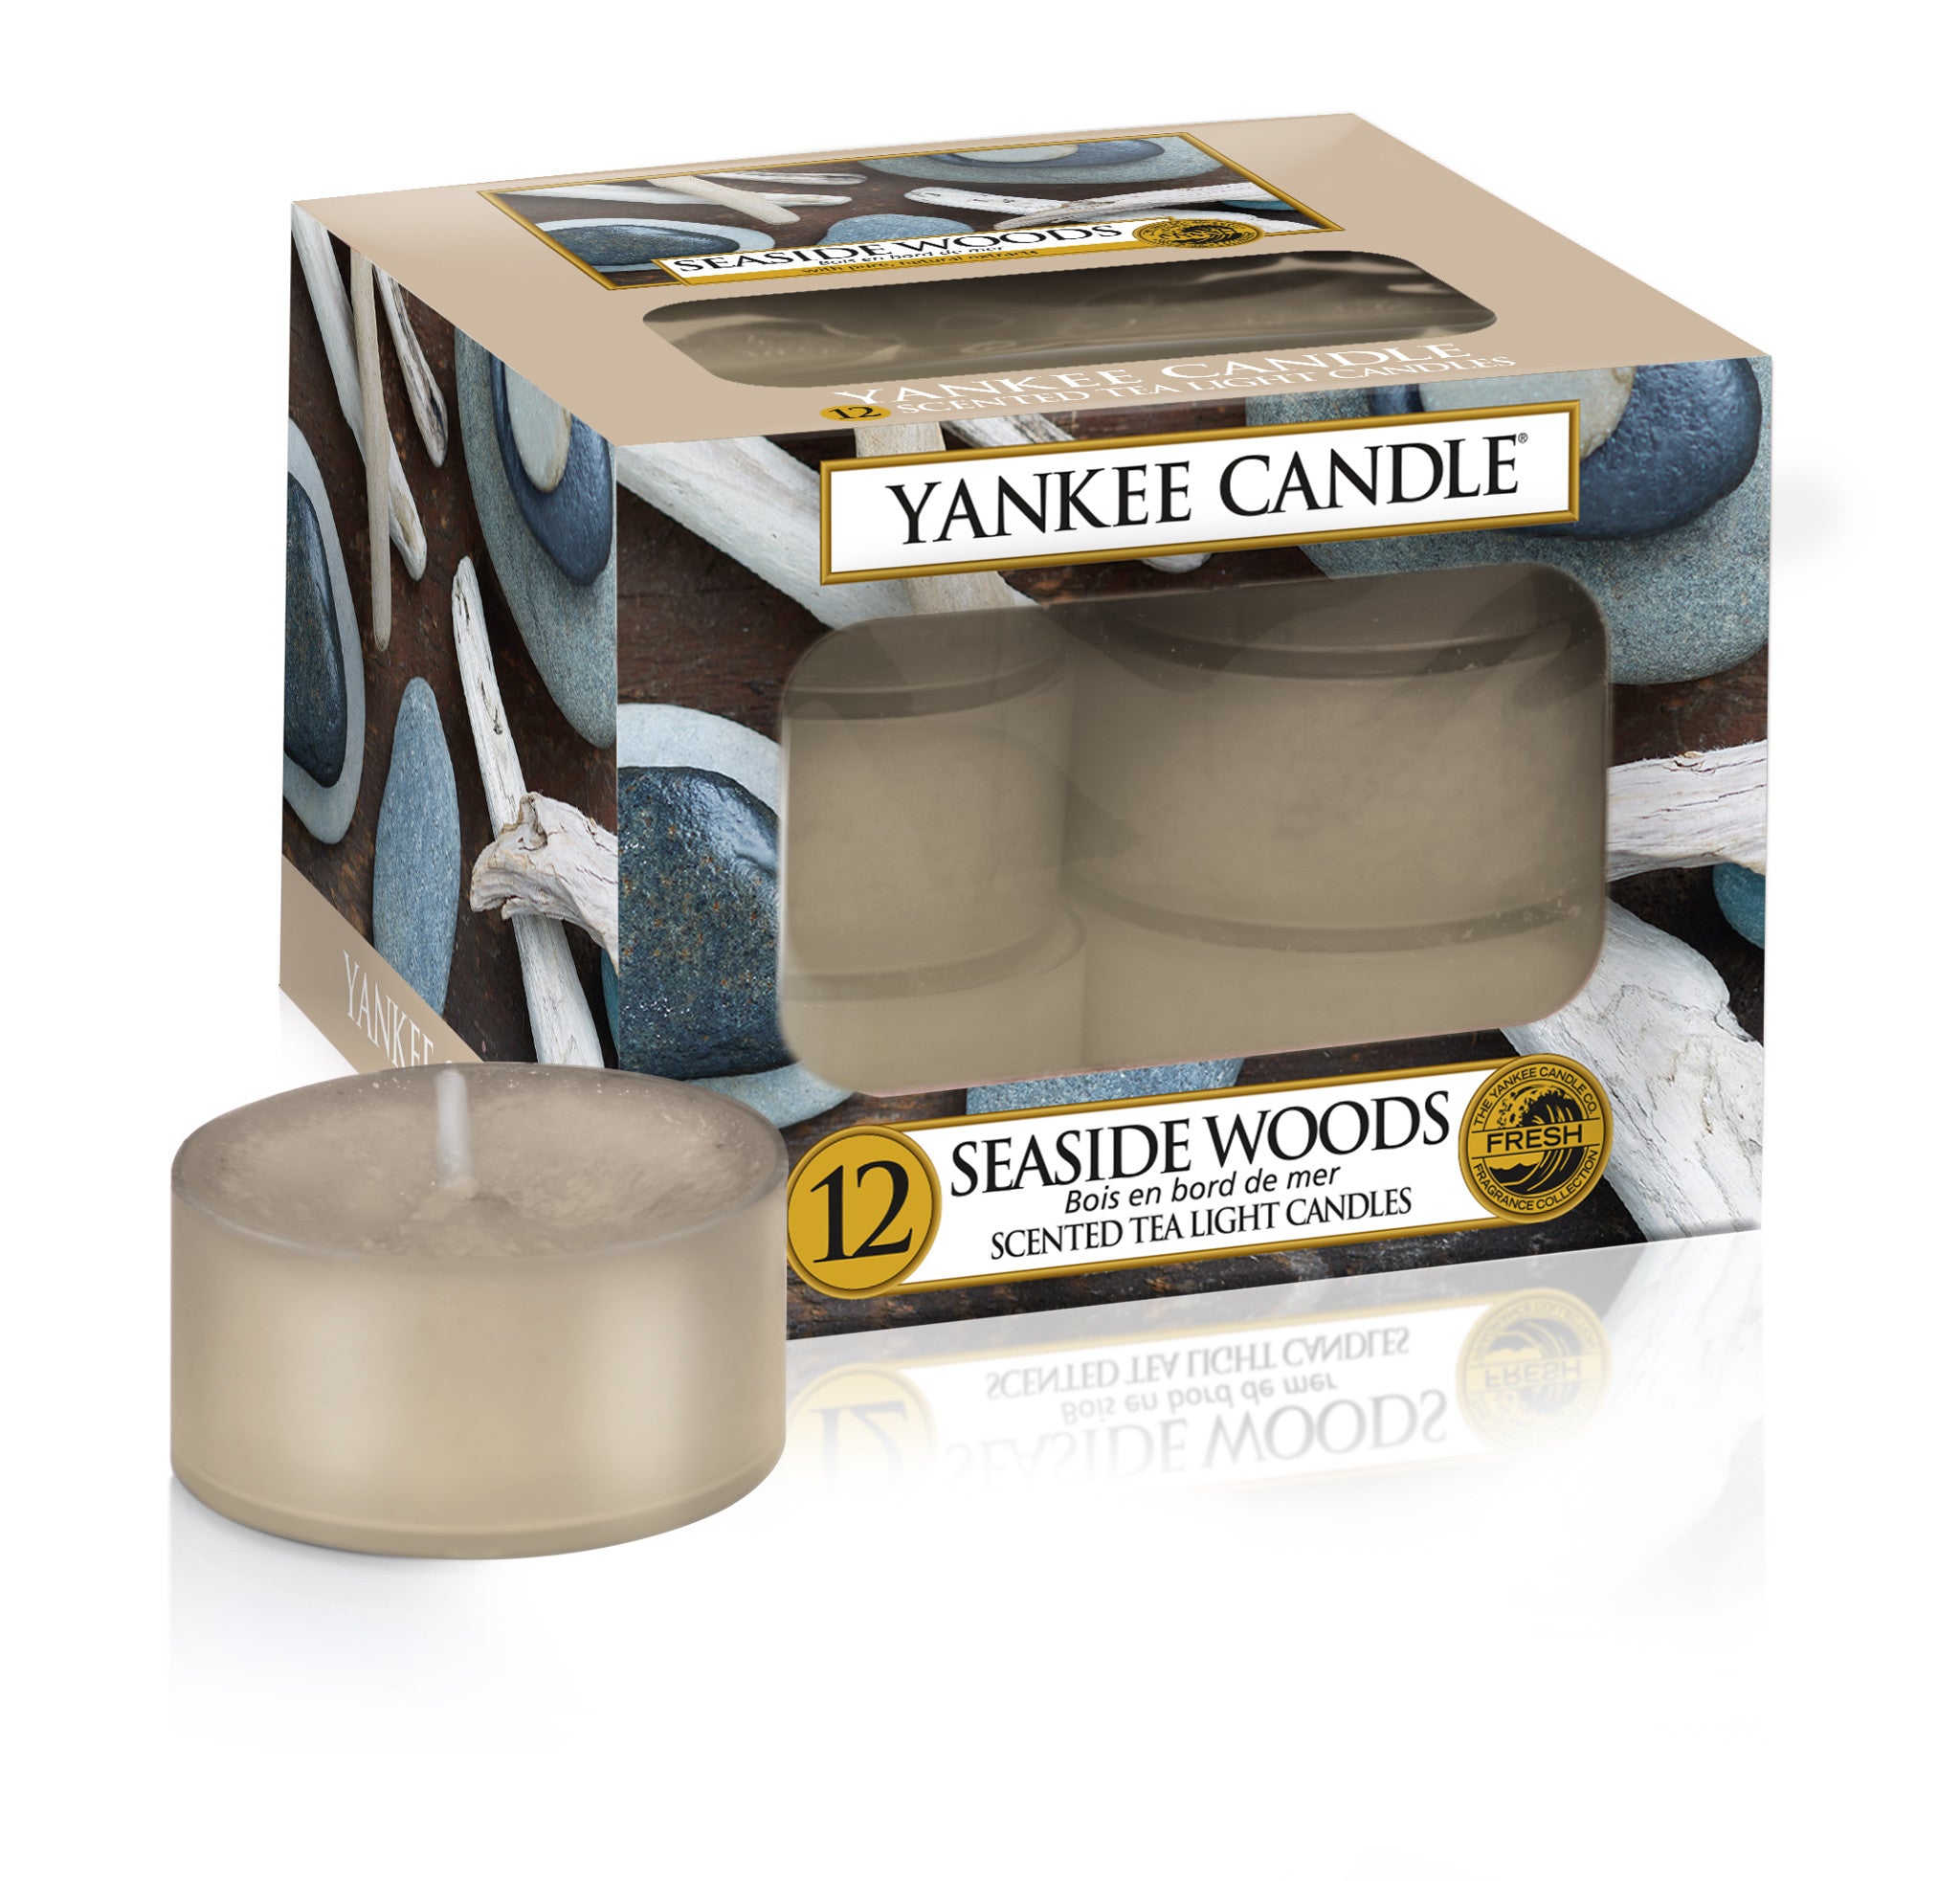 SEASIDE WOODS -Yankee Candle- Tea Light